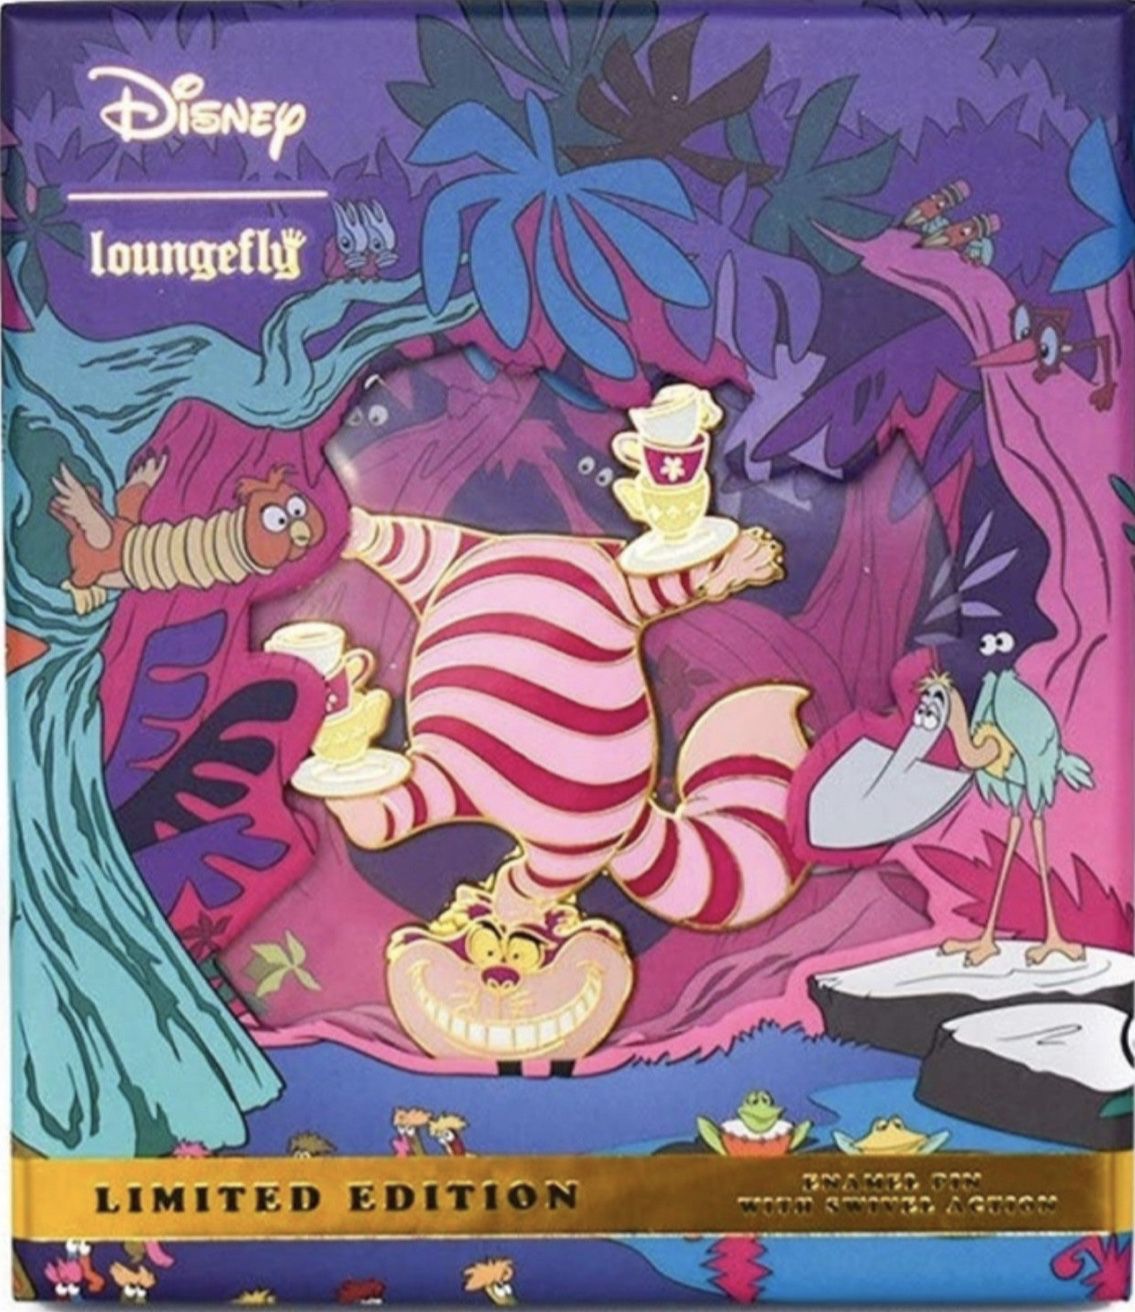 Disney Loungefly LE Alice In Wonderland Cheshire Cat Jumbo Pin